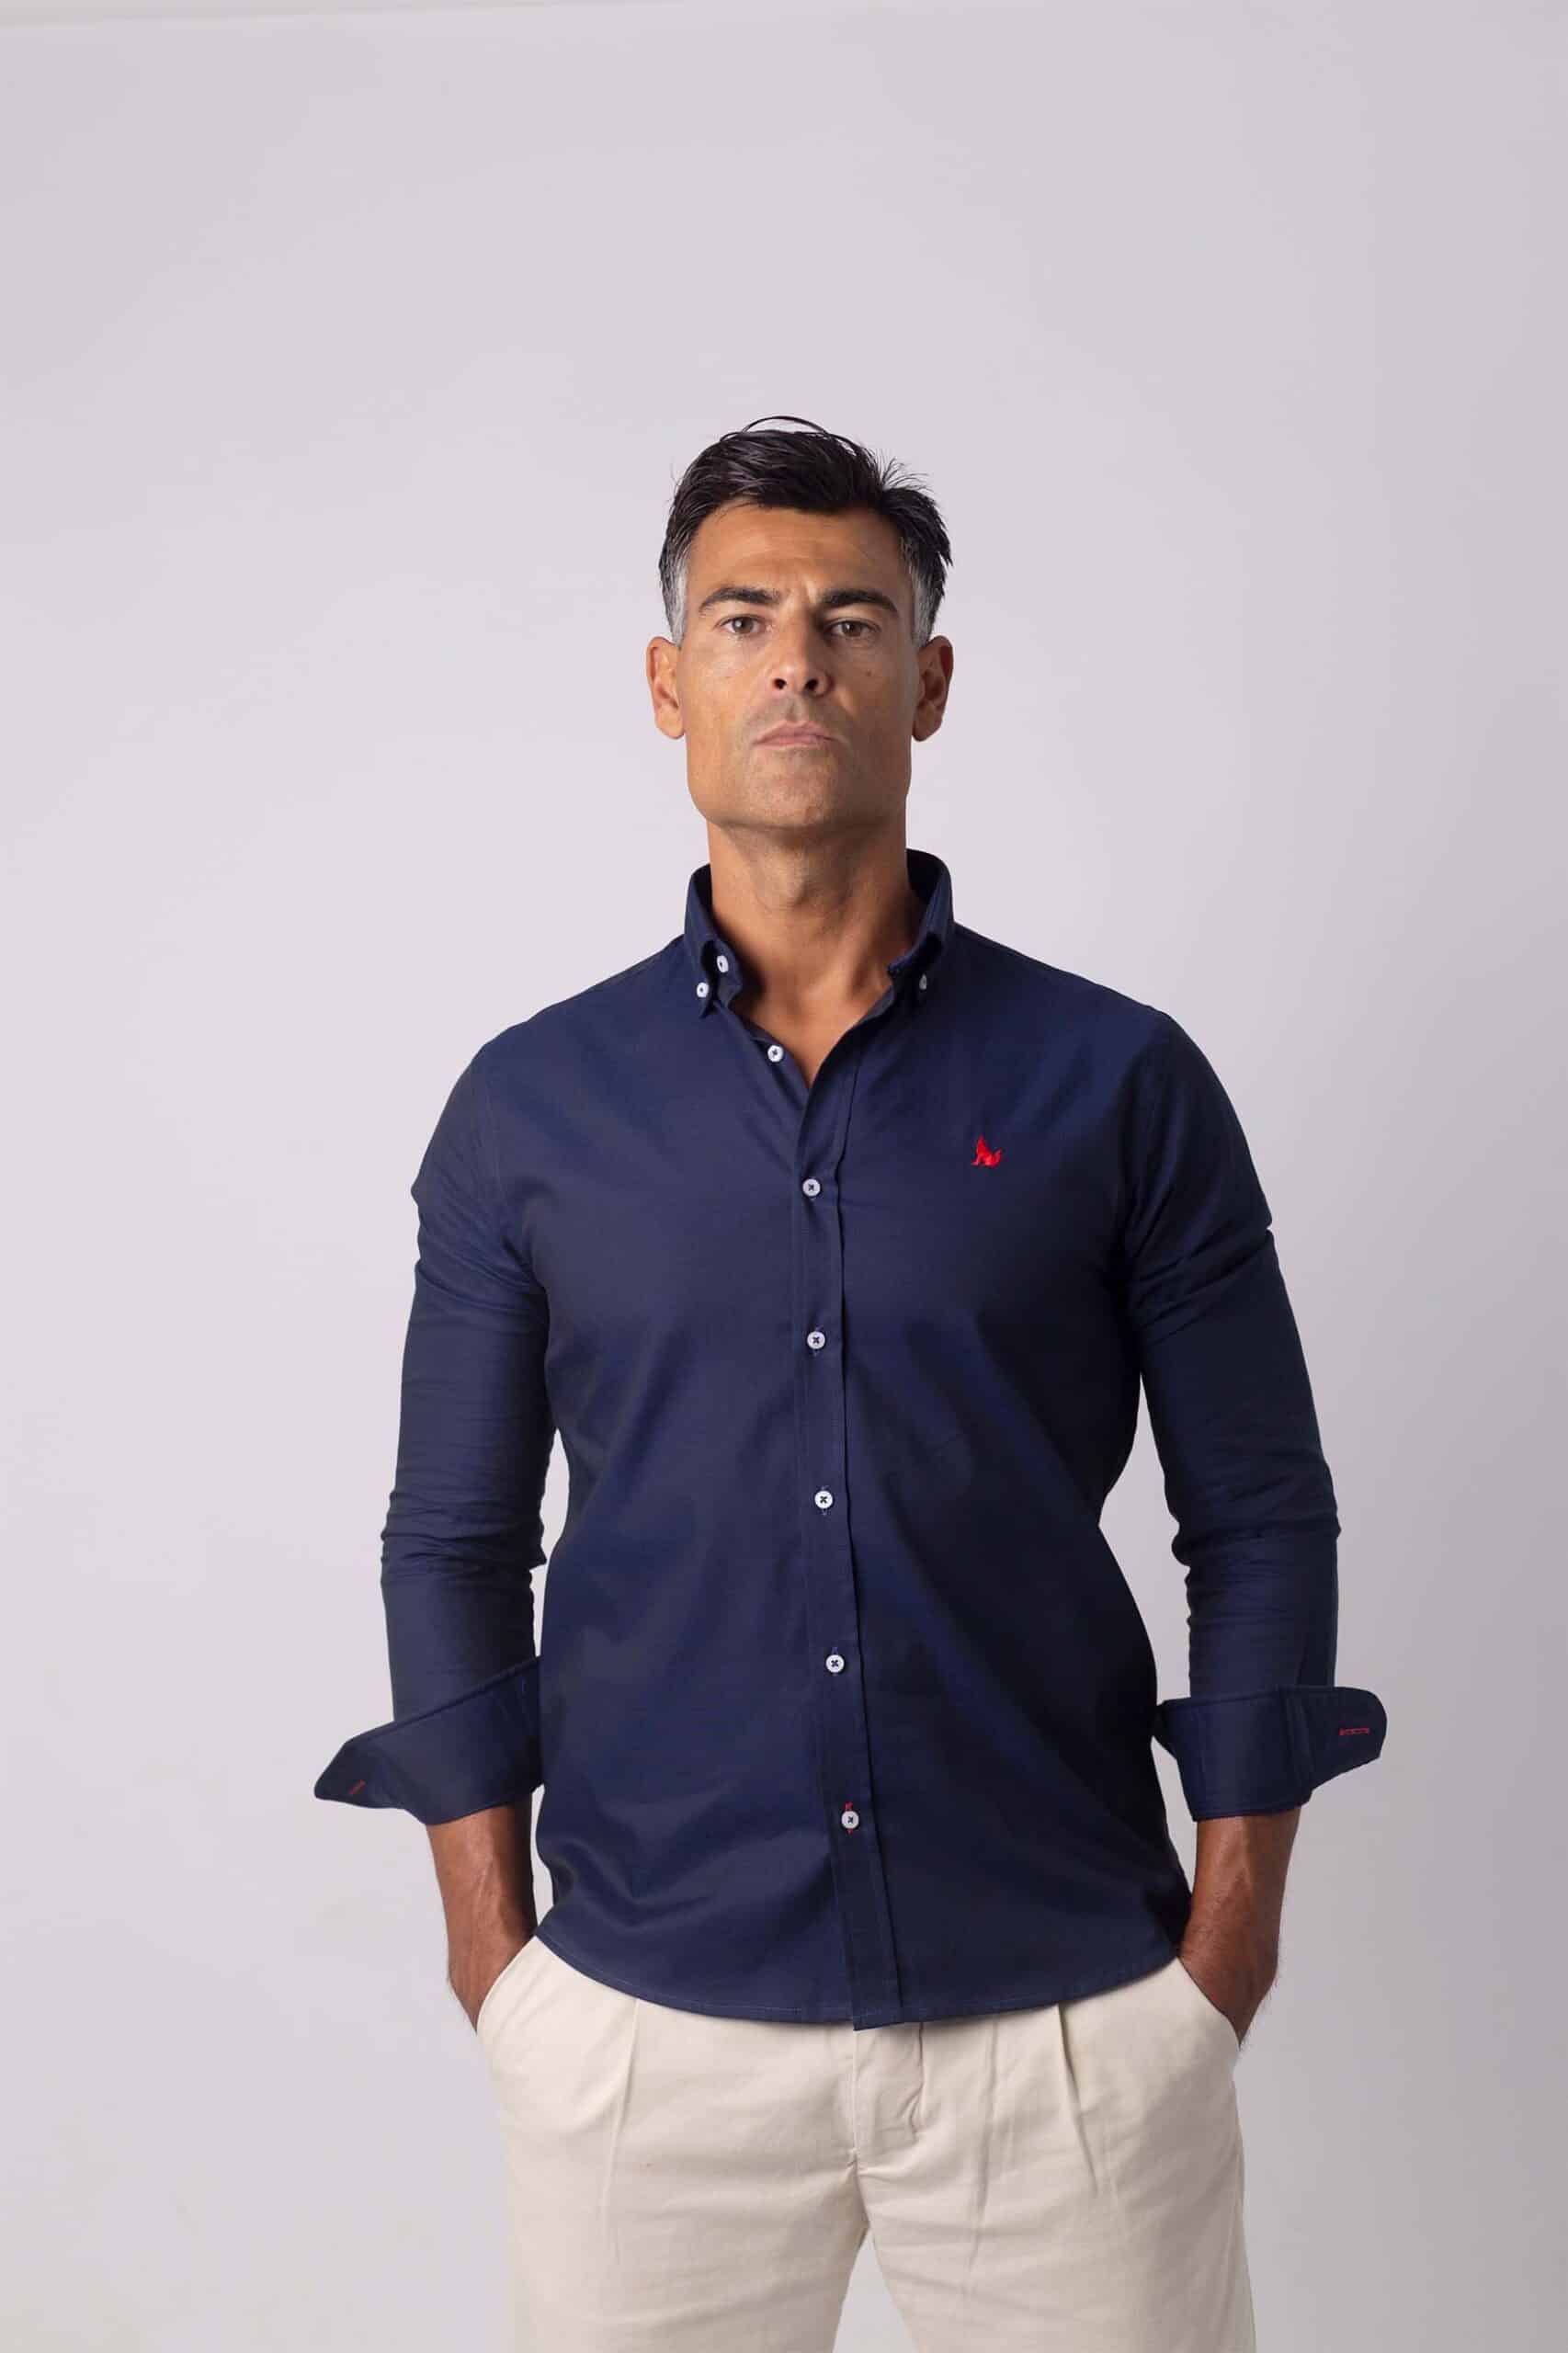 modelo con camisa azul marino Colección la isla